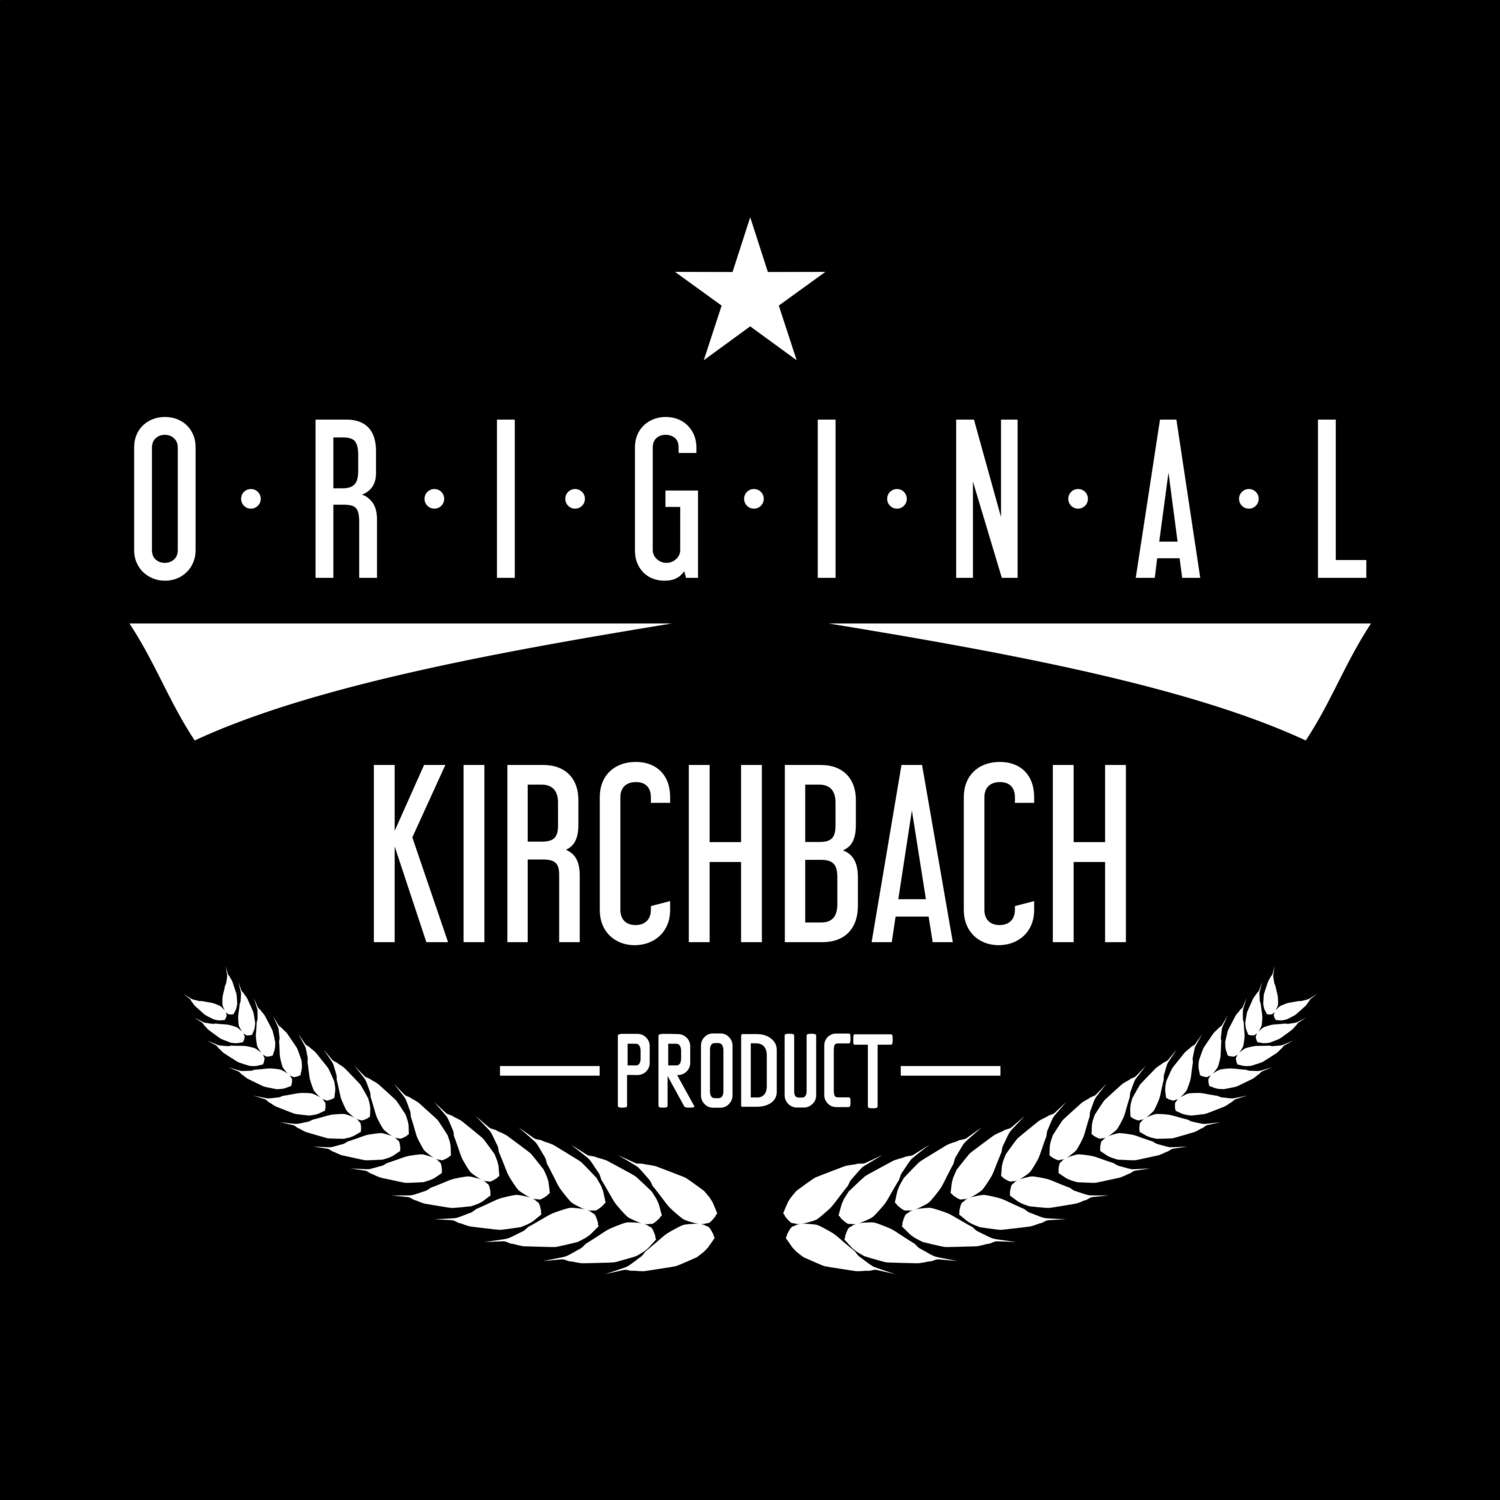 Kirchbach T-Shirt »Original Product«